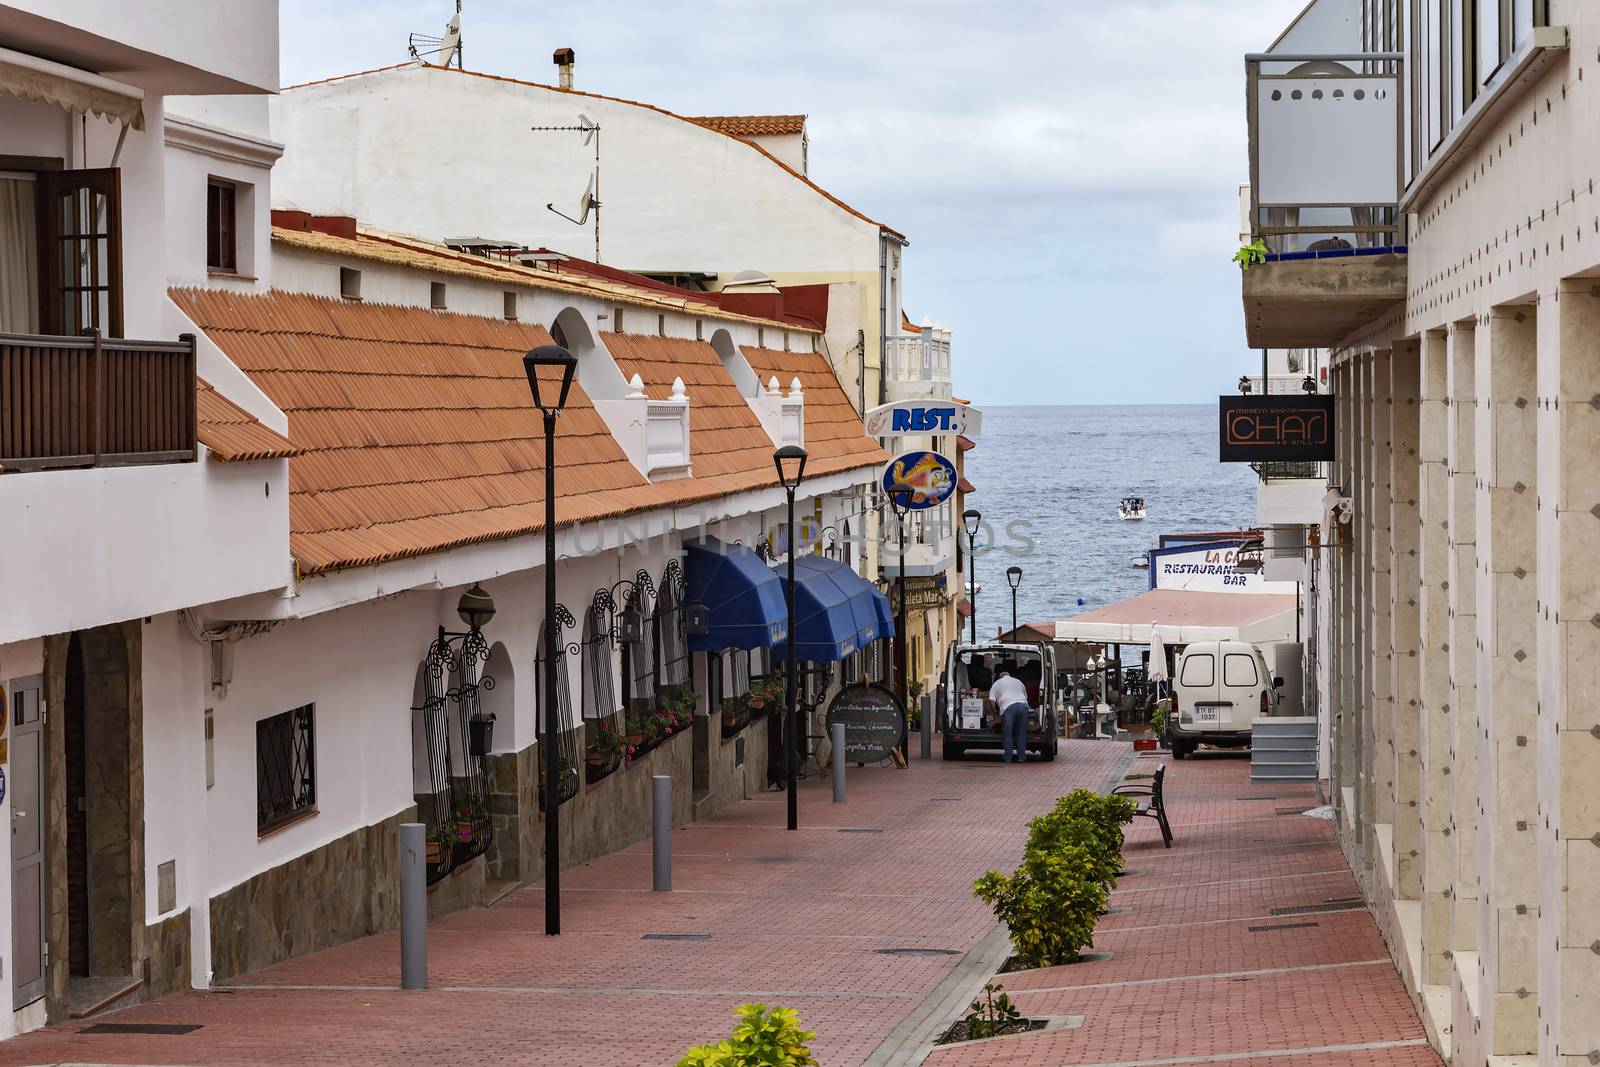 Spain, Tenerife - 10.09.2016: La Caleta village street leading to the shore of the ocean